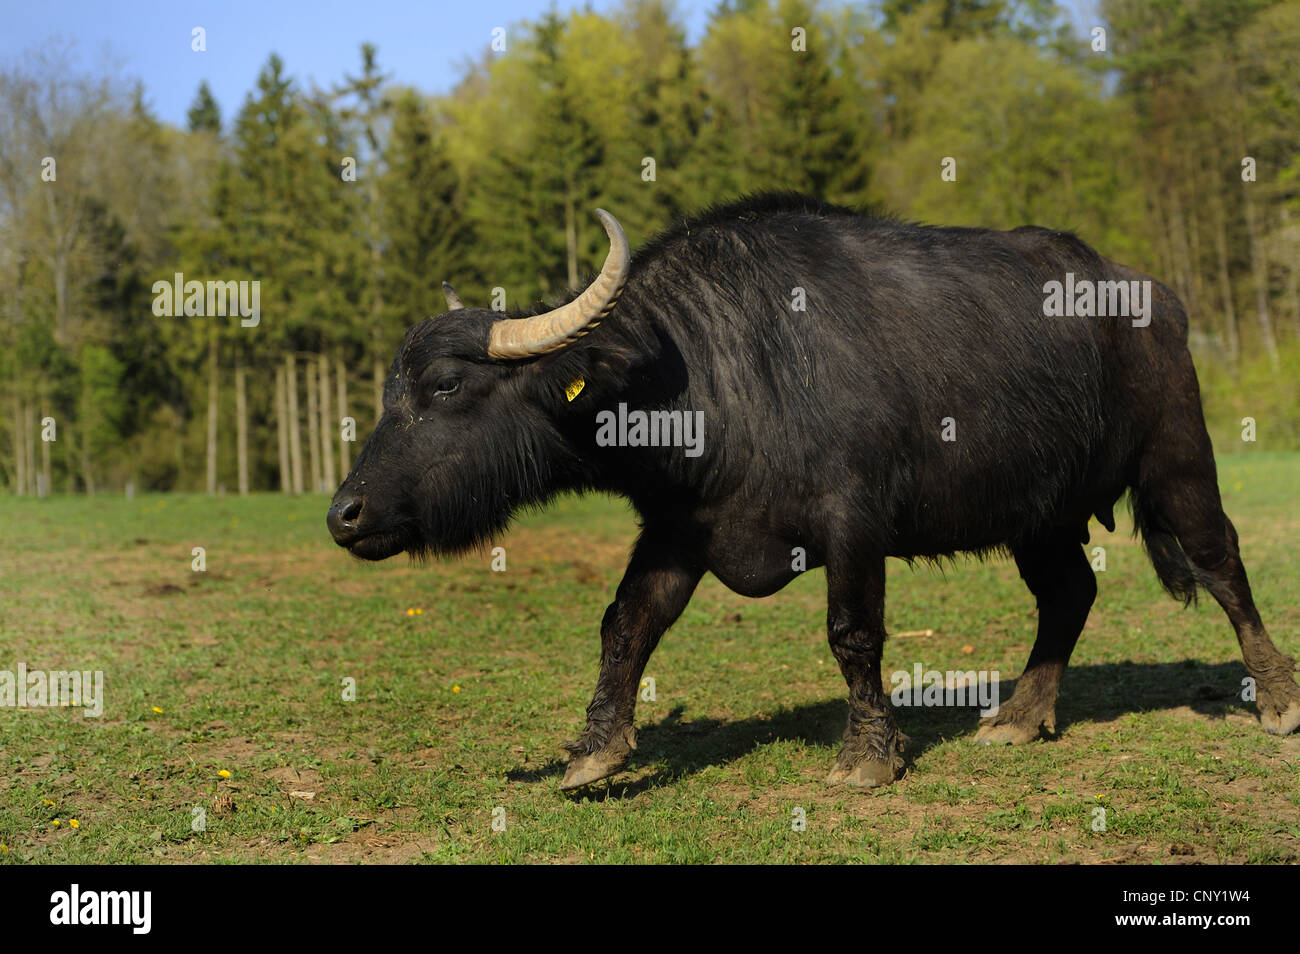 Asian water buffalo, wild water buffalo, carabao (Bubalus bubalis, Bubalus arnee), in a meadow Stock Photo